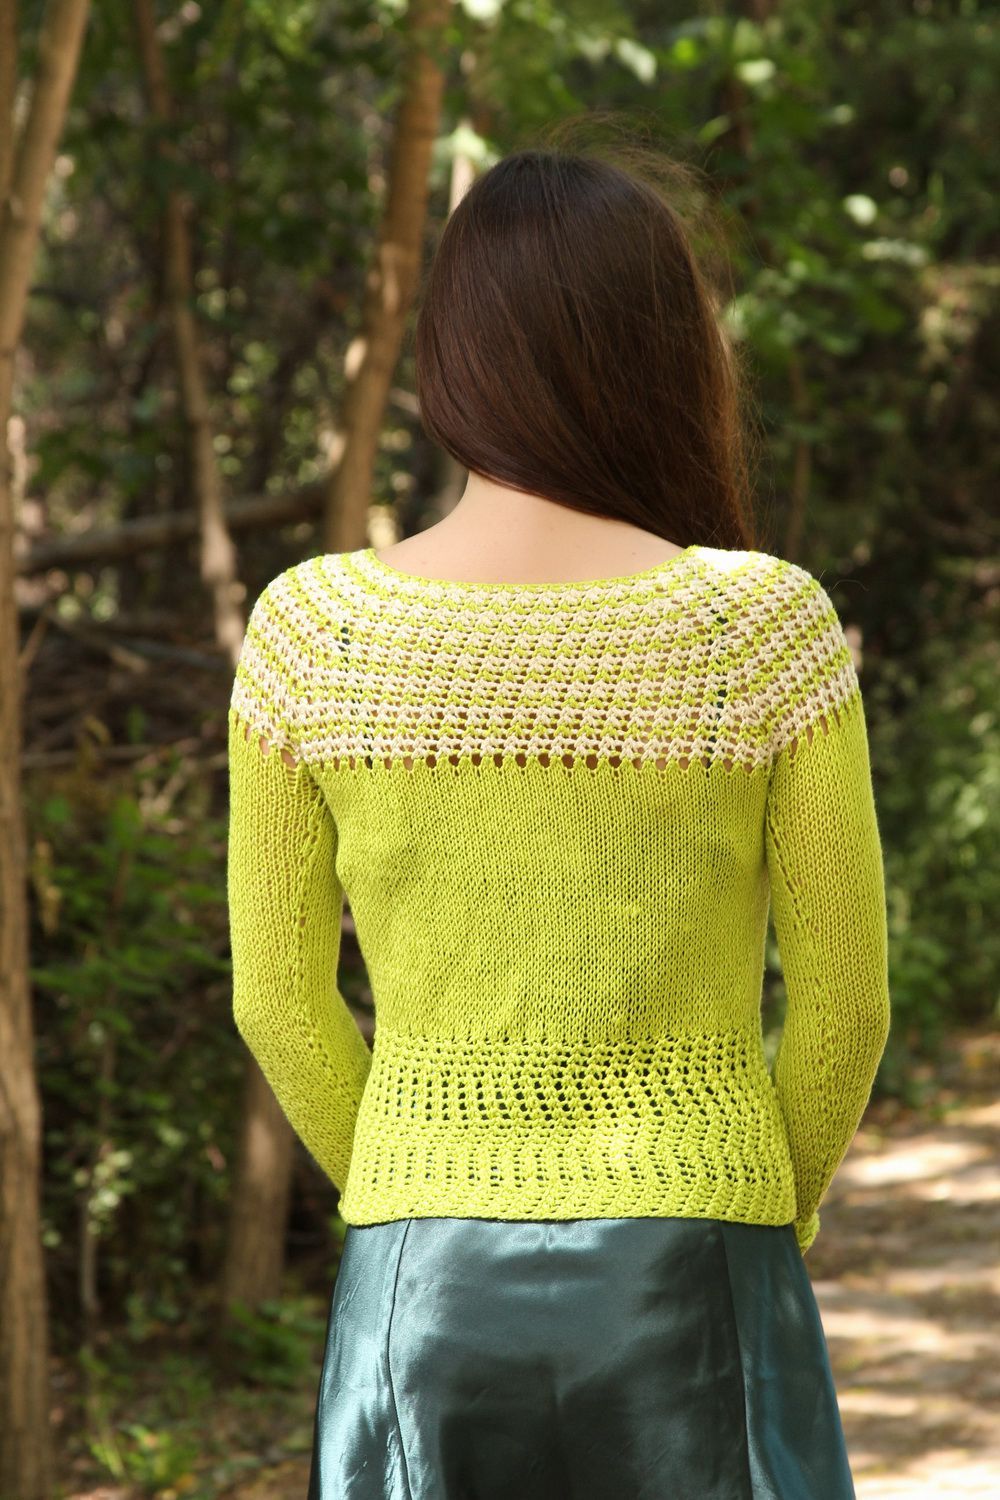 Crocheted jumper photo 3